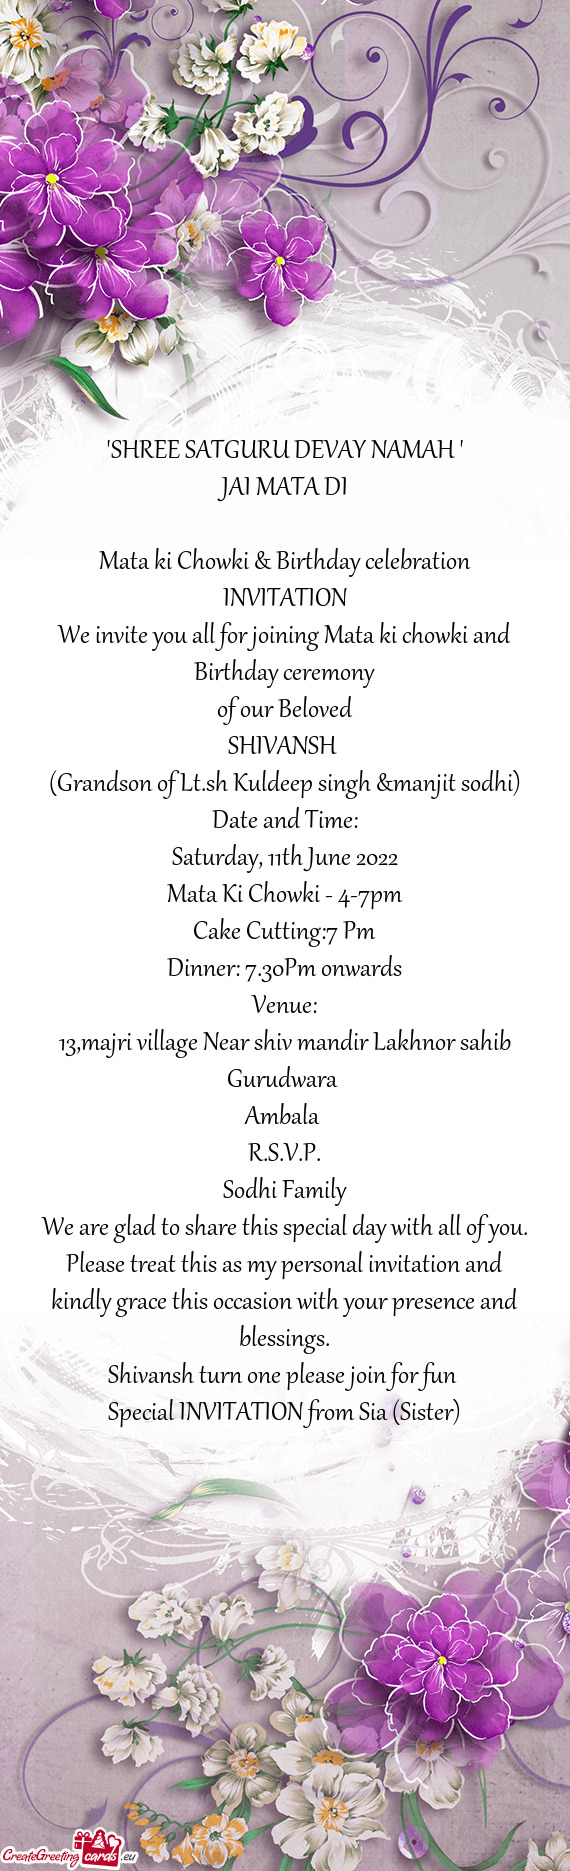 We invite you all for joining Mata ki chowki and Birthday ceremony